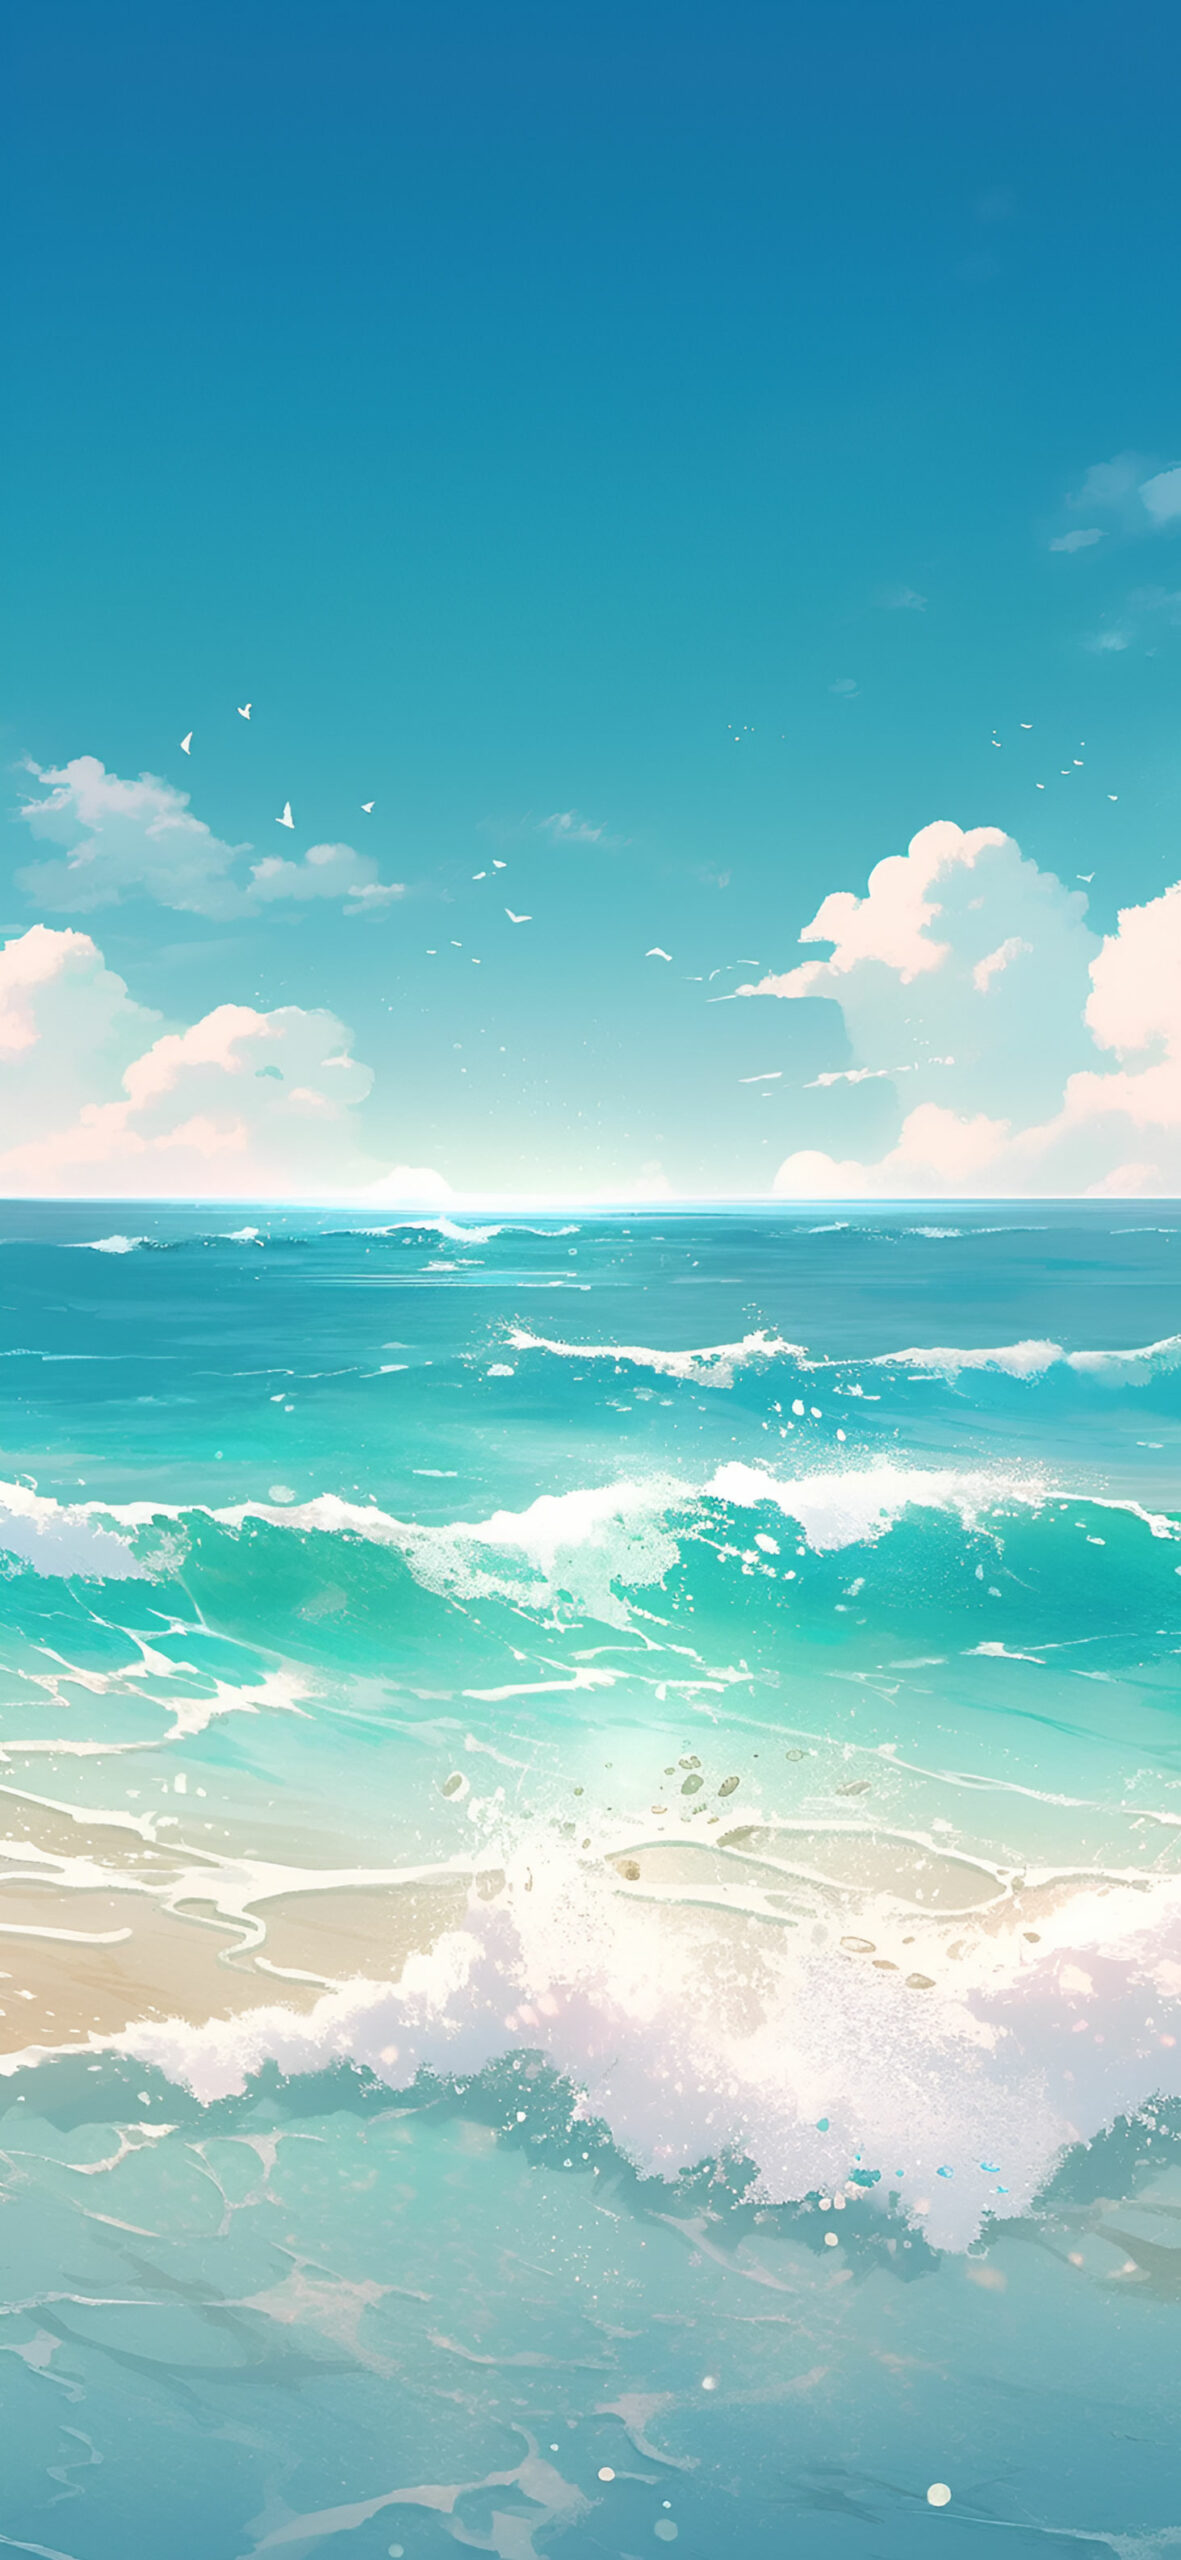 Aesthetric Turquoise Ocean & Clouds Wallpaper Aesthetric Ocean